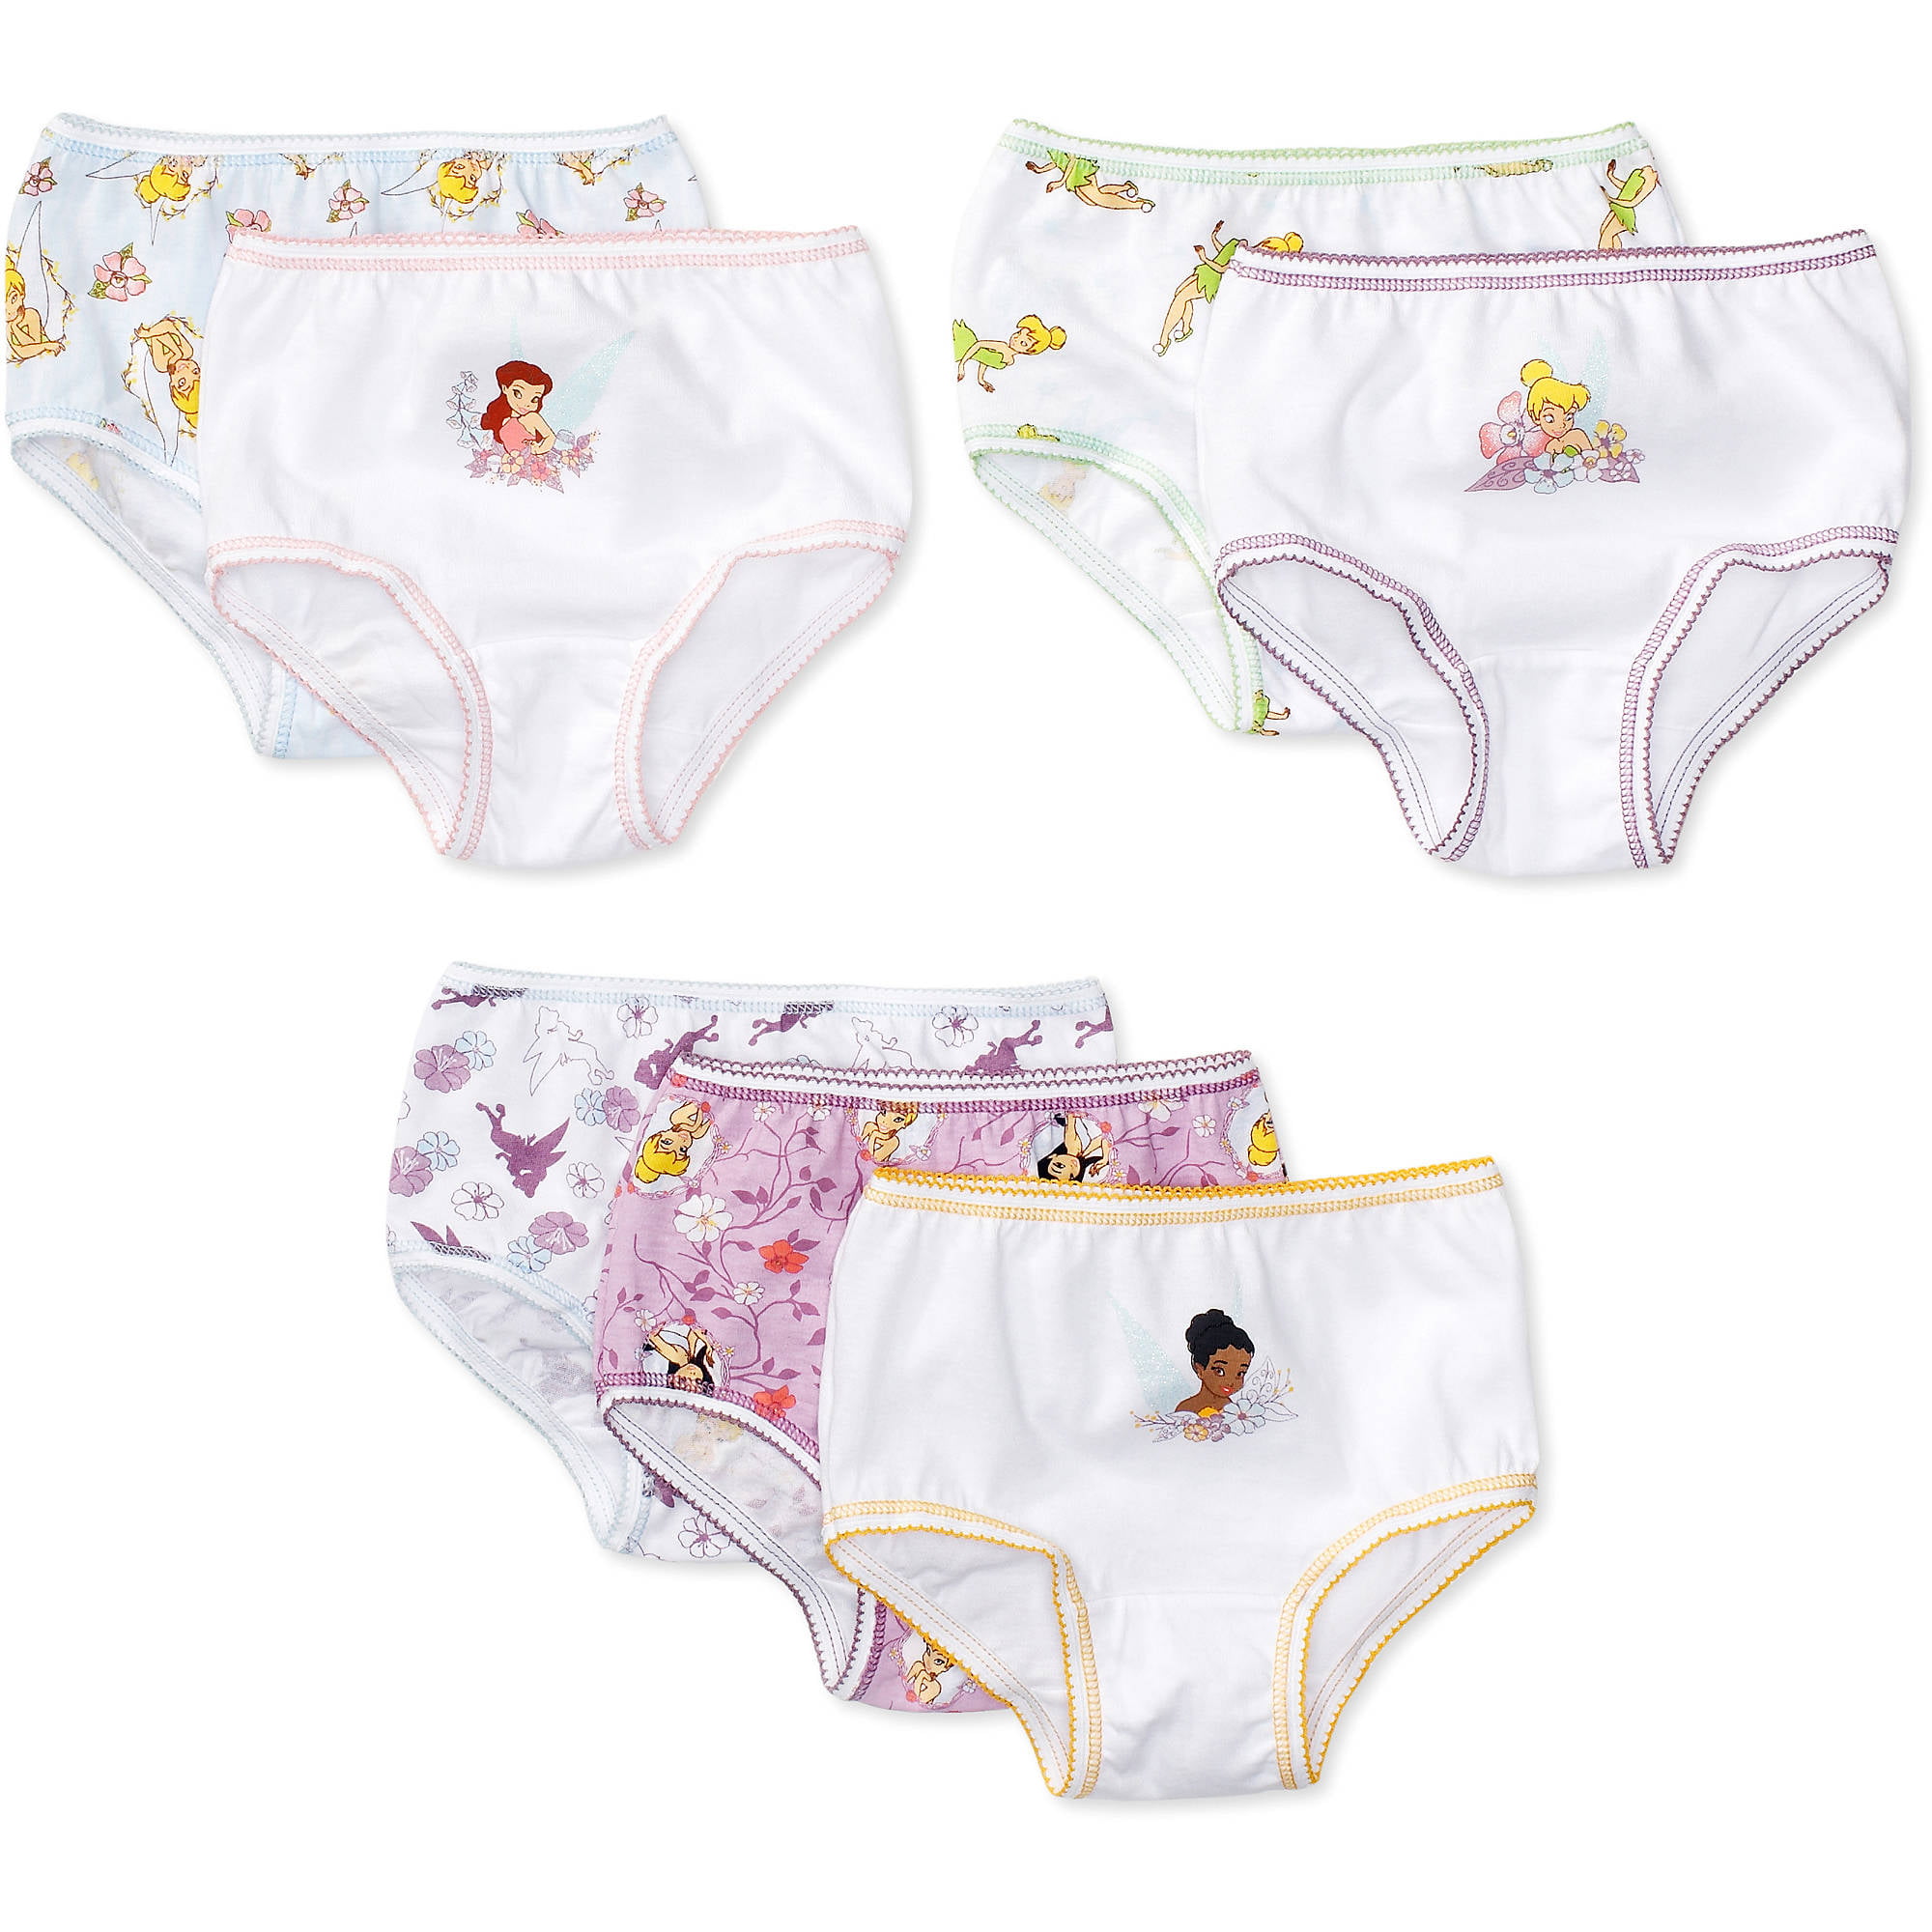 Disney Fairies Tinker Bell Underwear, 7-Pack (Toddler Girls)